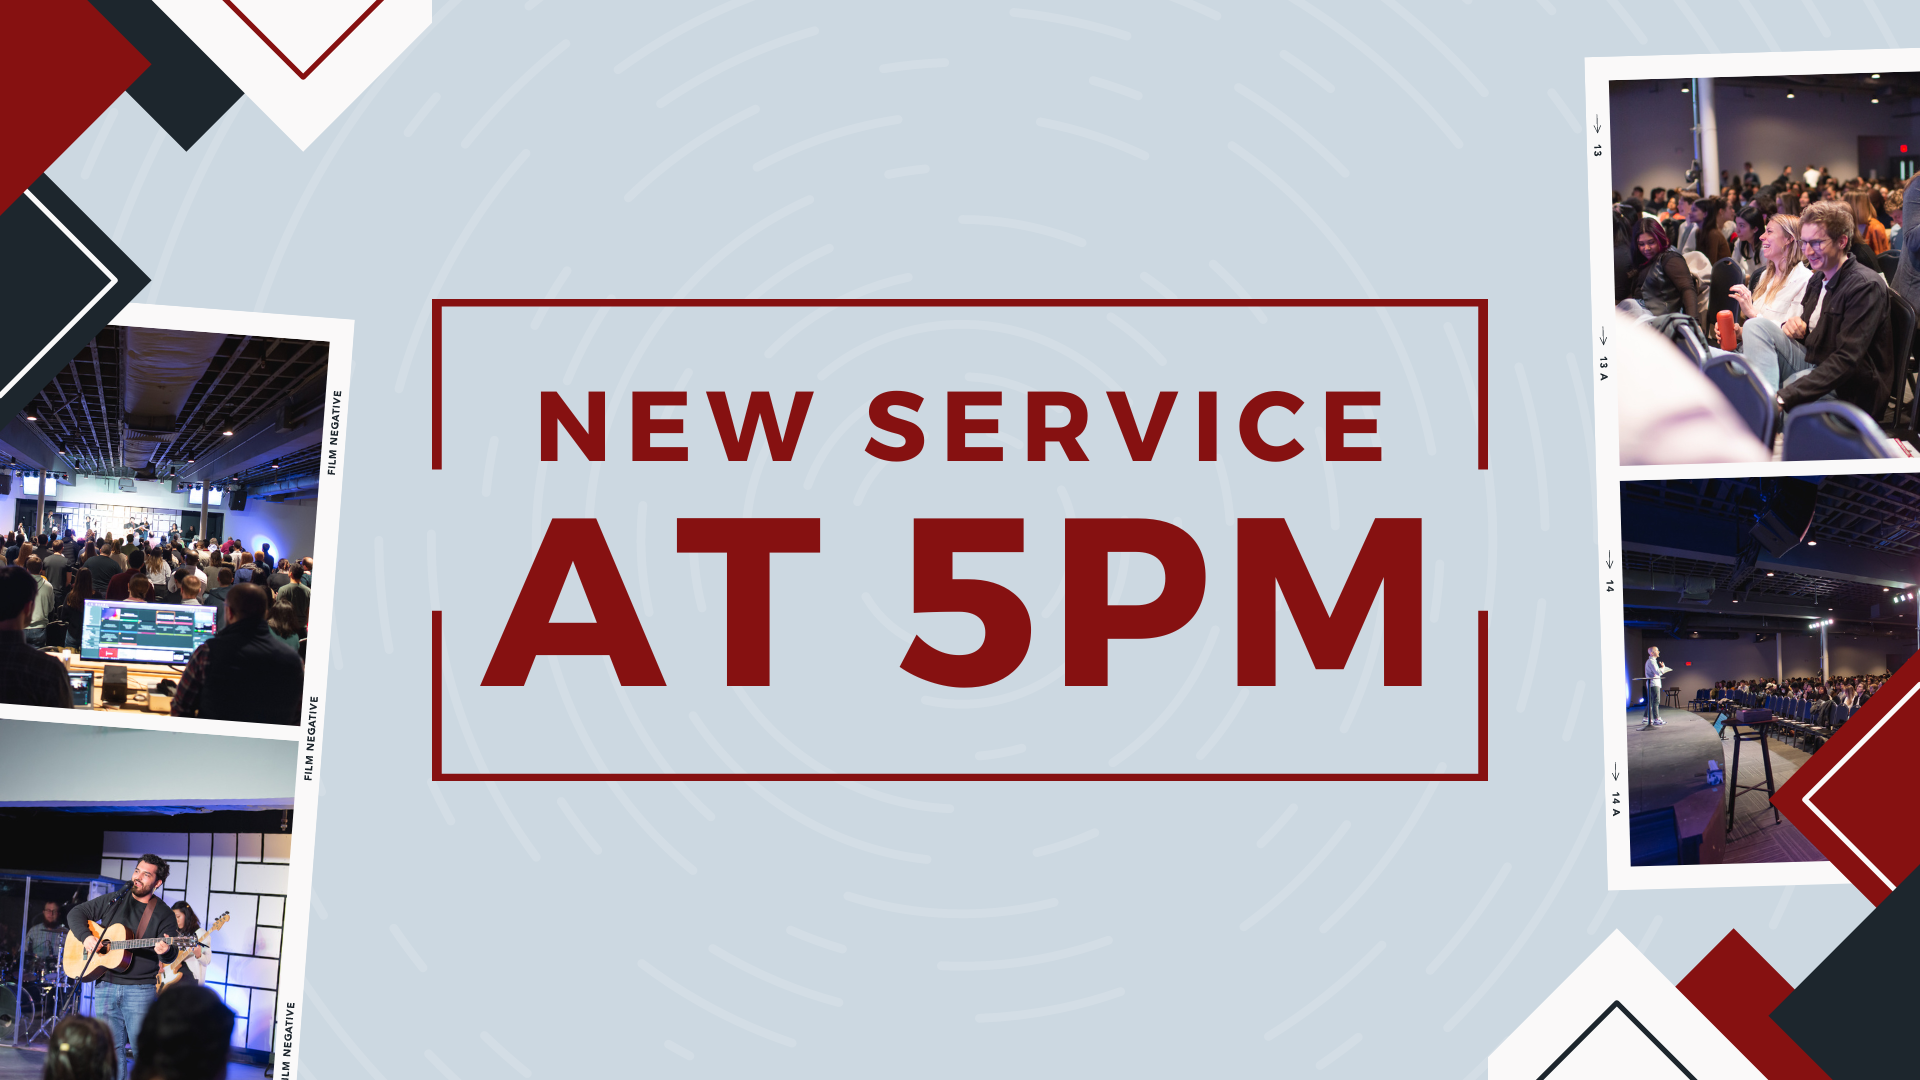 5PM Service Launch!